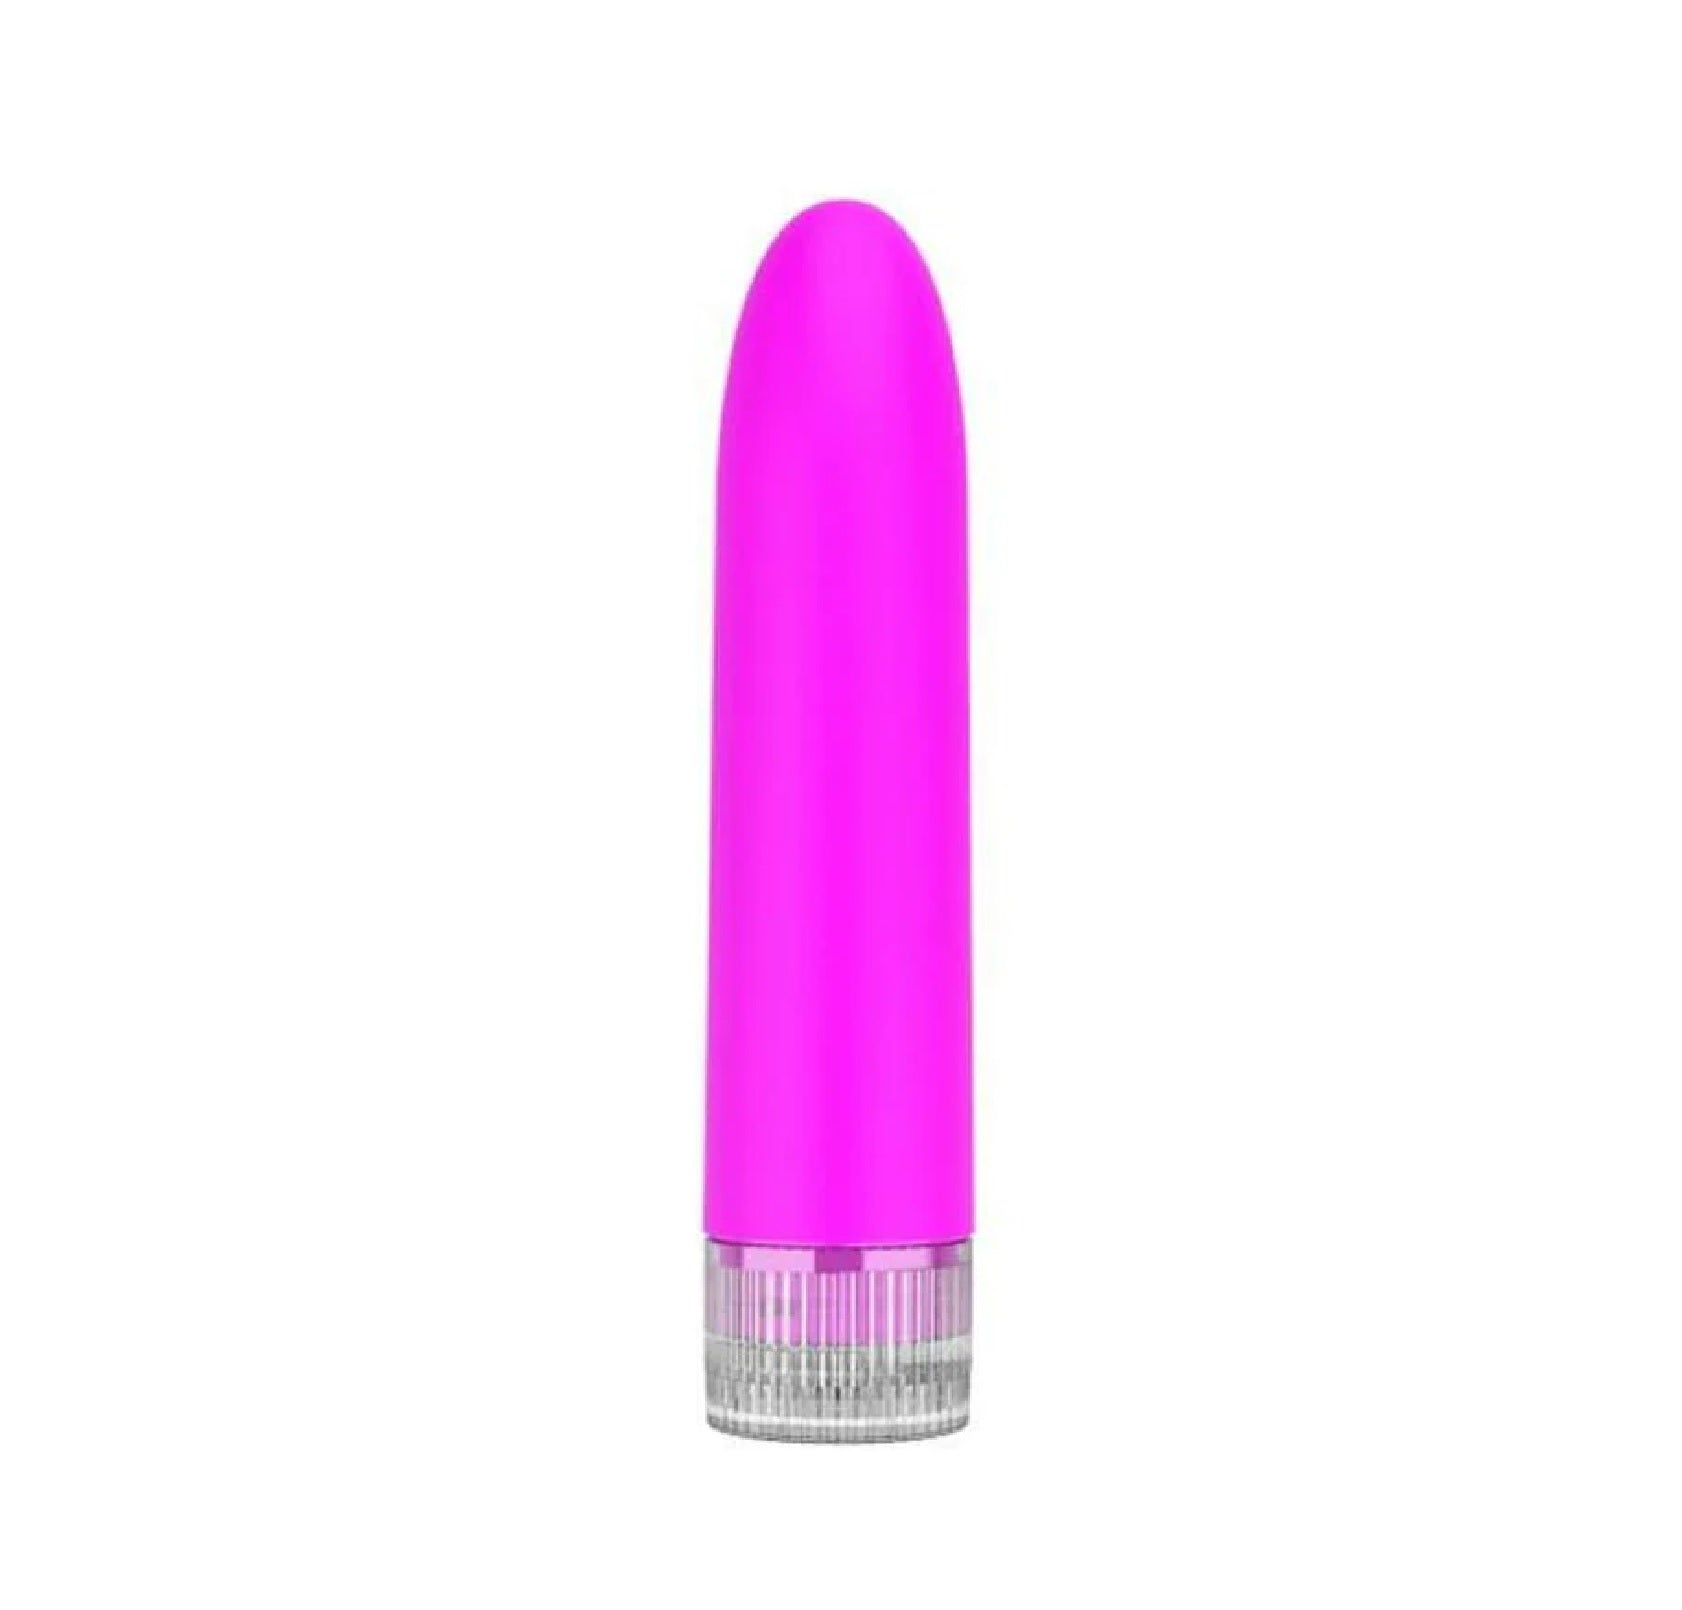 Luminous Eleni 10-Speed Slimline Bullet Vibrator - Fuchsia